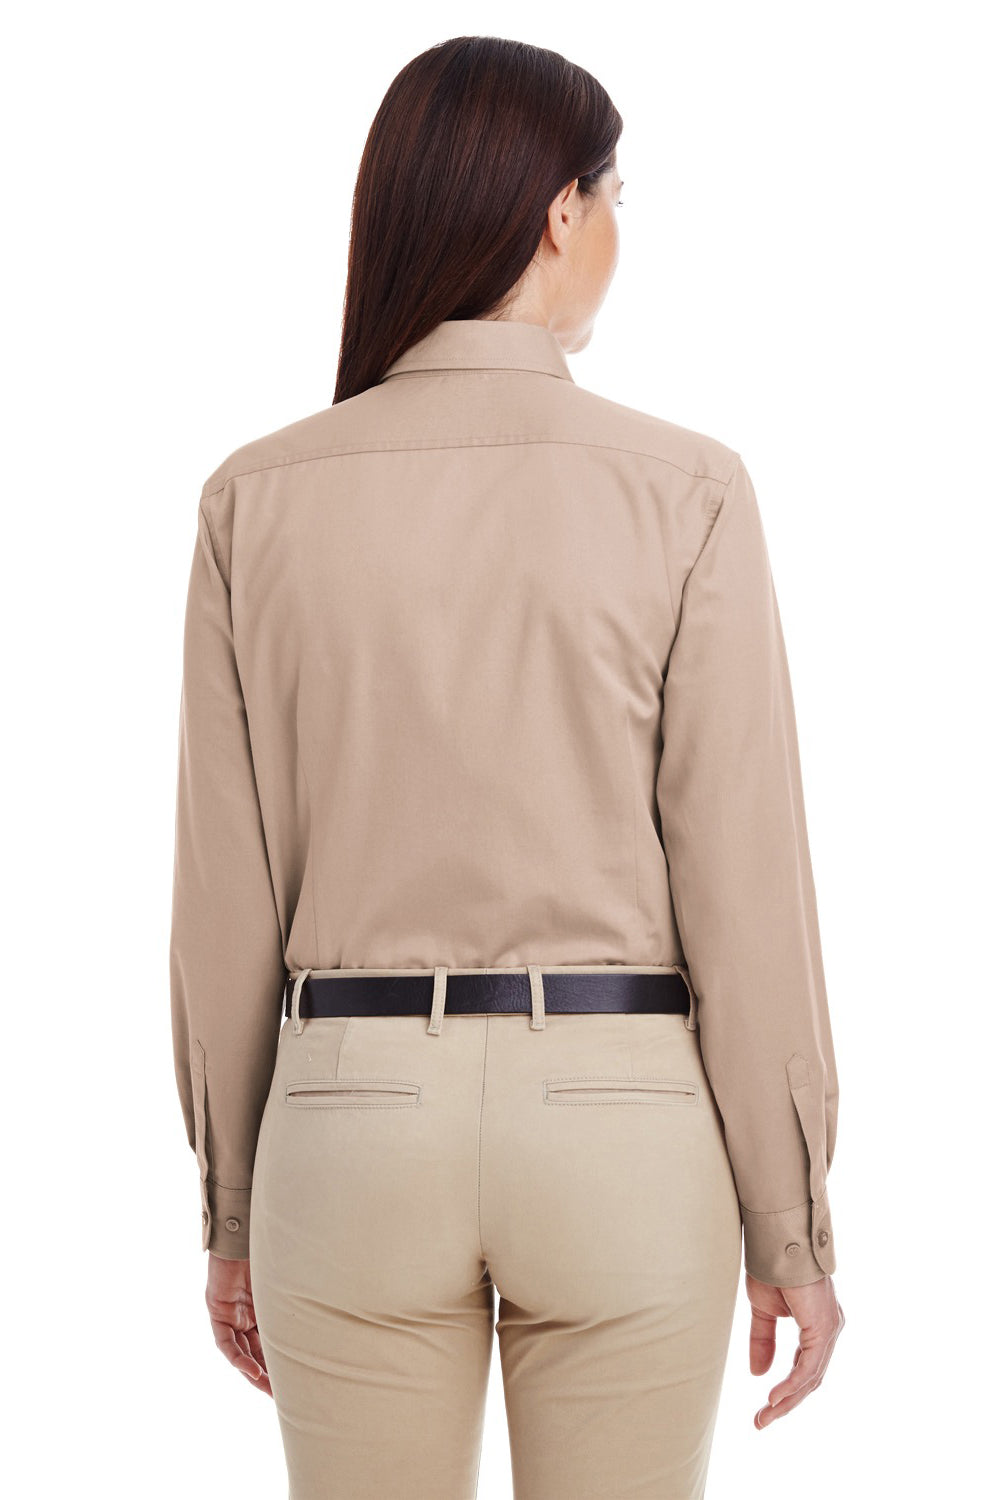 Harriton M581W Womens Foundation Stain Resistant Long Sleeve Button Down Shirt Khaki Brown Back